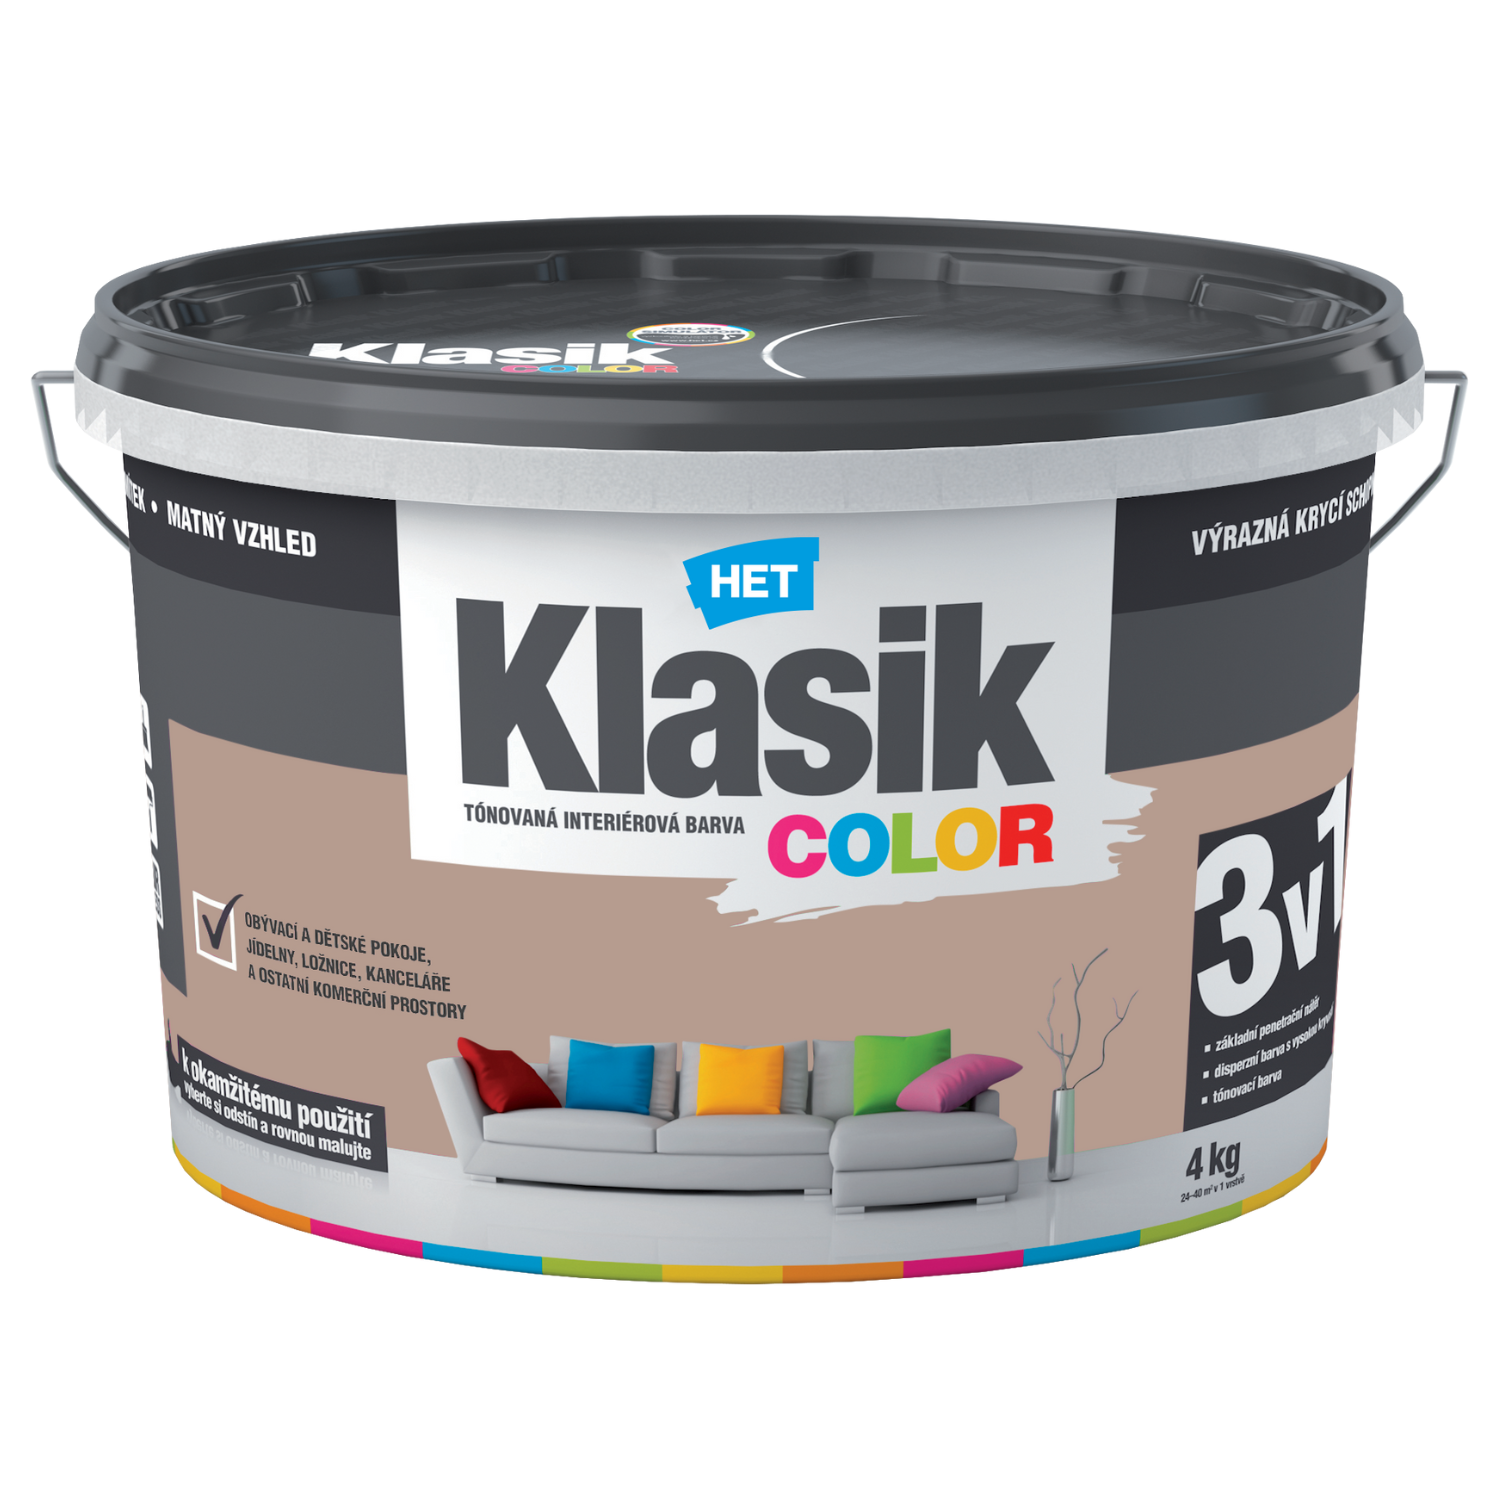 HET Klasik COLOR tónovaná interiérová akrylátová disperzná oteruvzdorná farba 4 kg, KC0257 - hnedý orechový